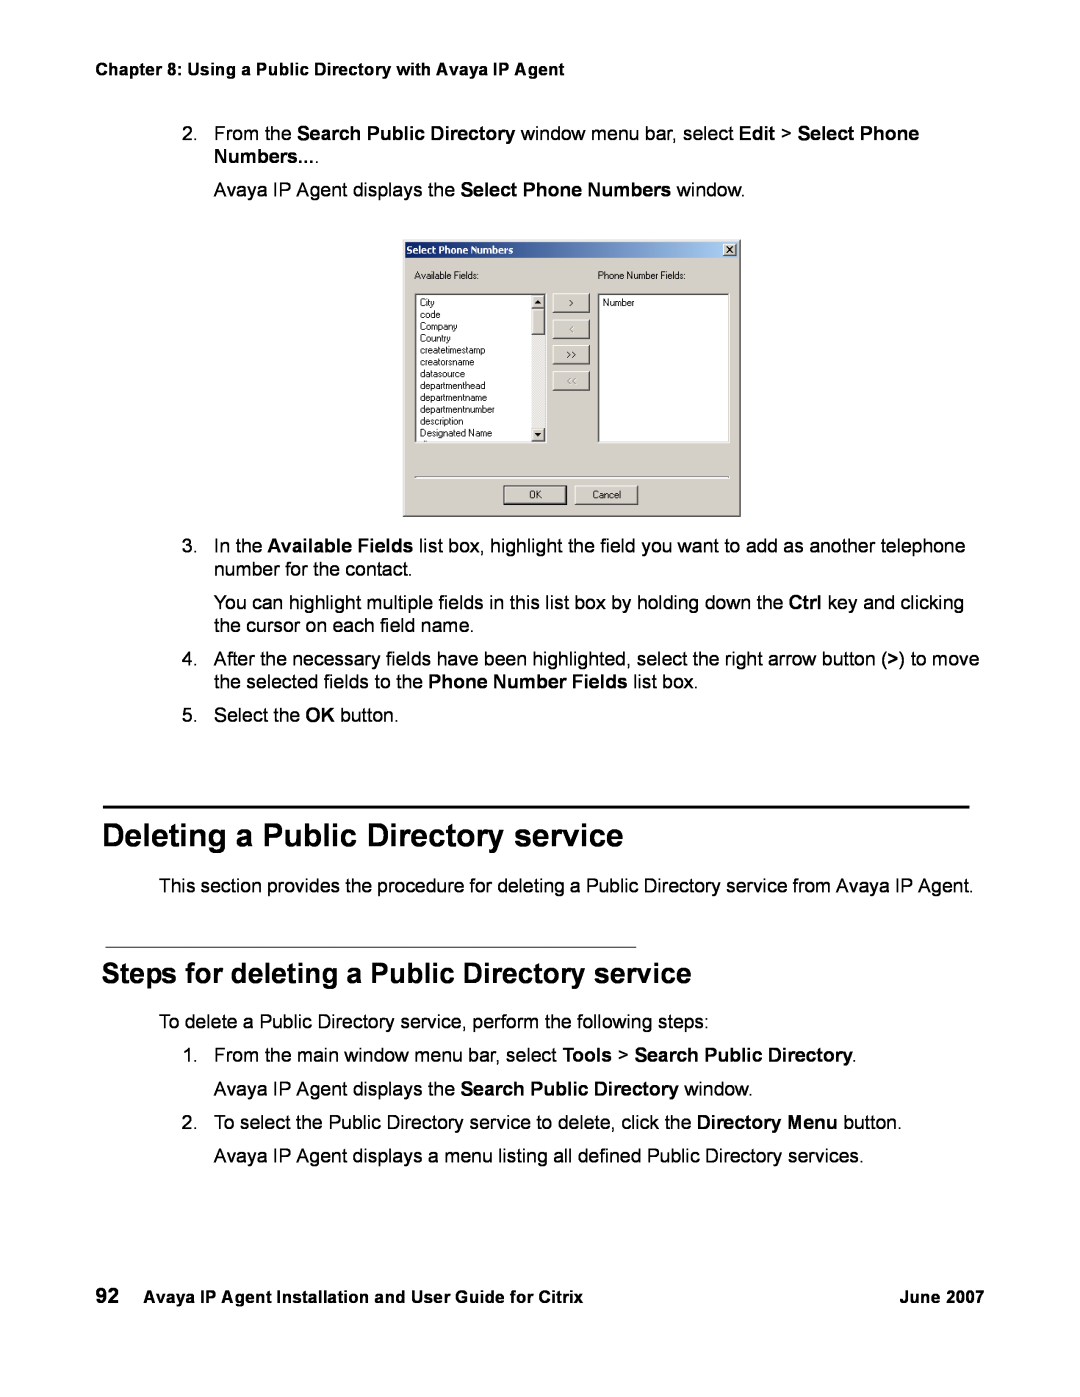 Avaya 7 manual Deleting a Public Directory service, Steps for deleting a Public Directory service 